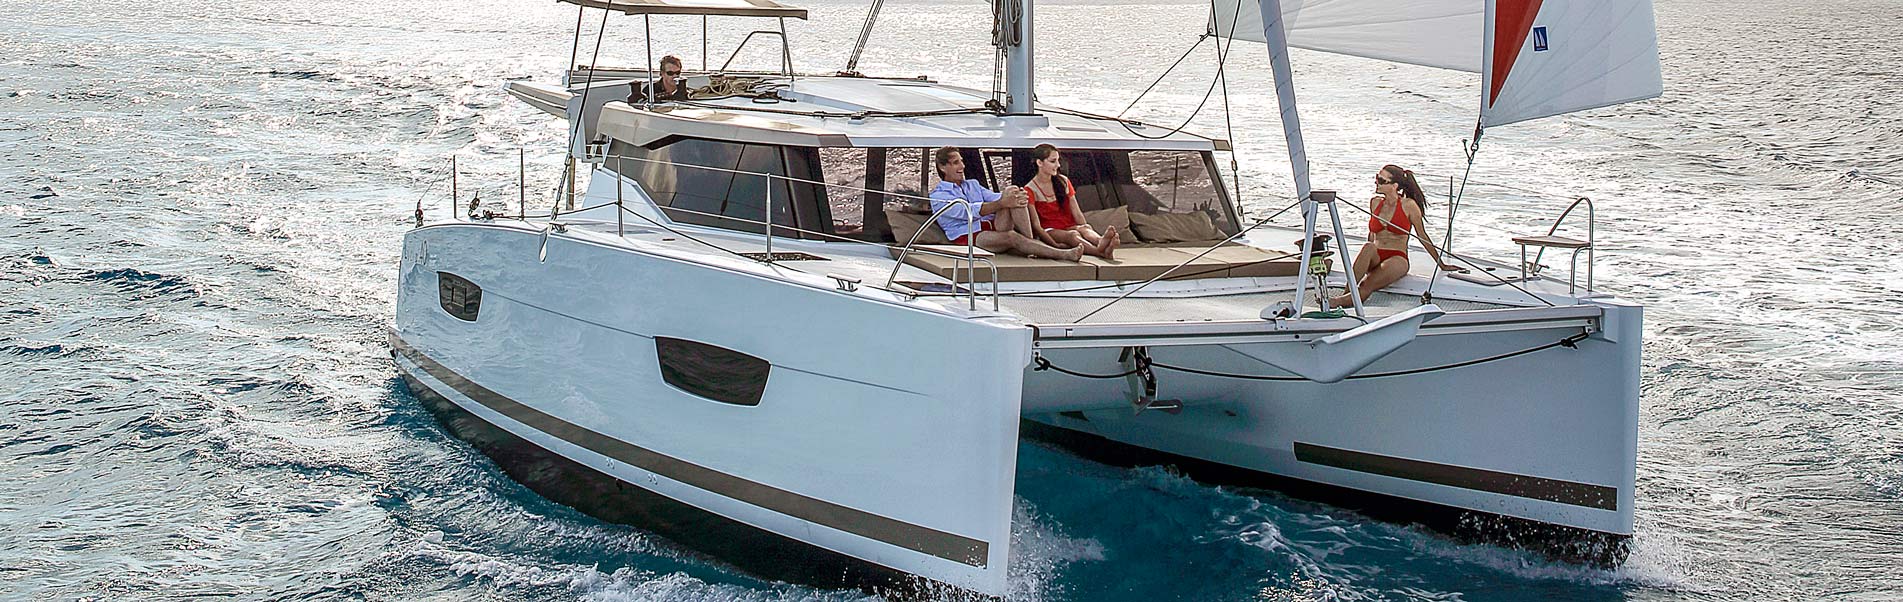 Fountain-Pajot-Lucia-40 in action - Luxury catamaran phenomenal sailing performance